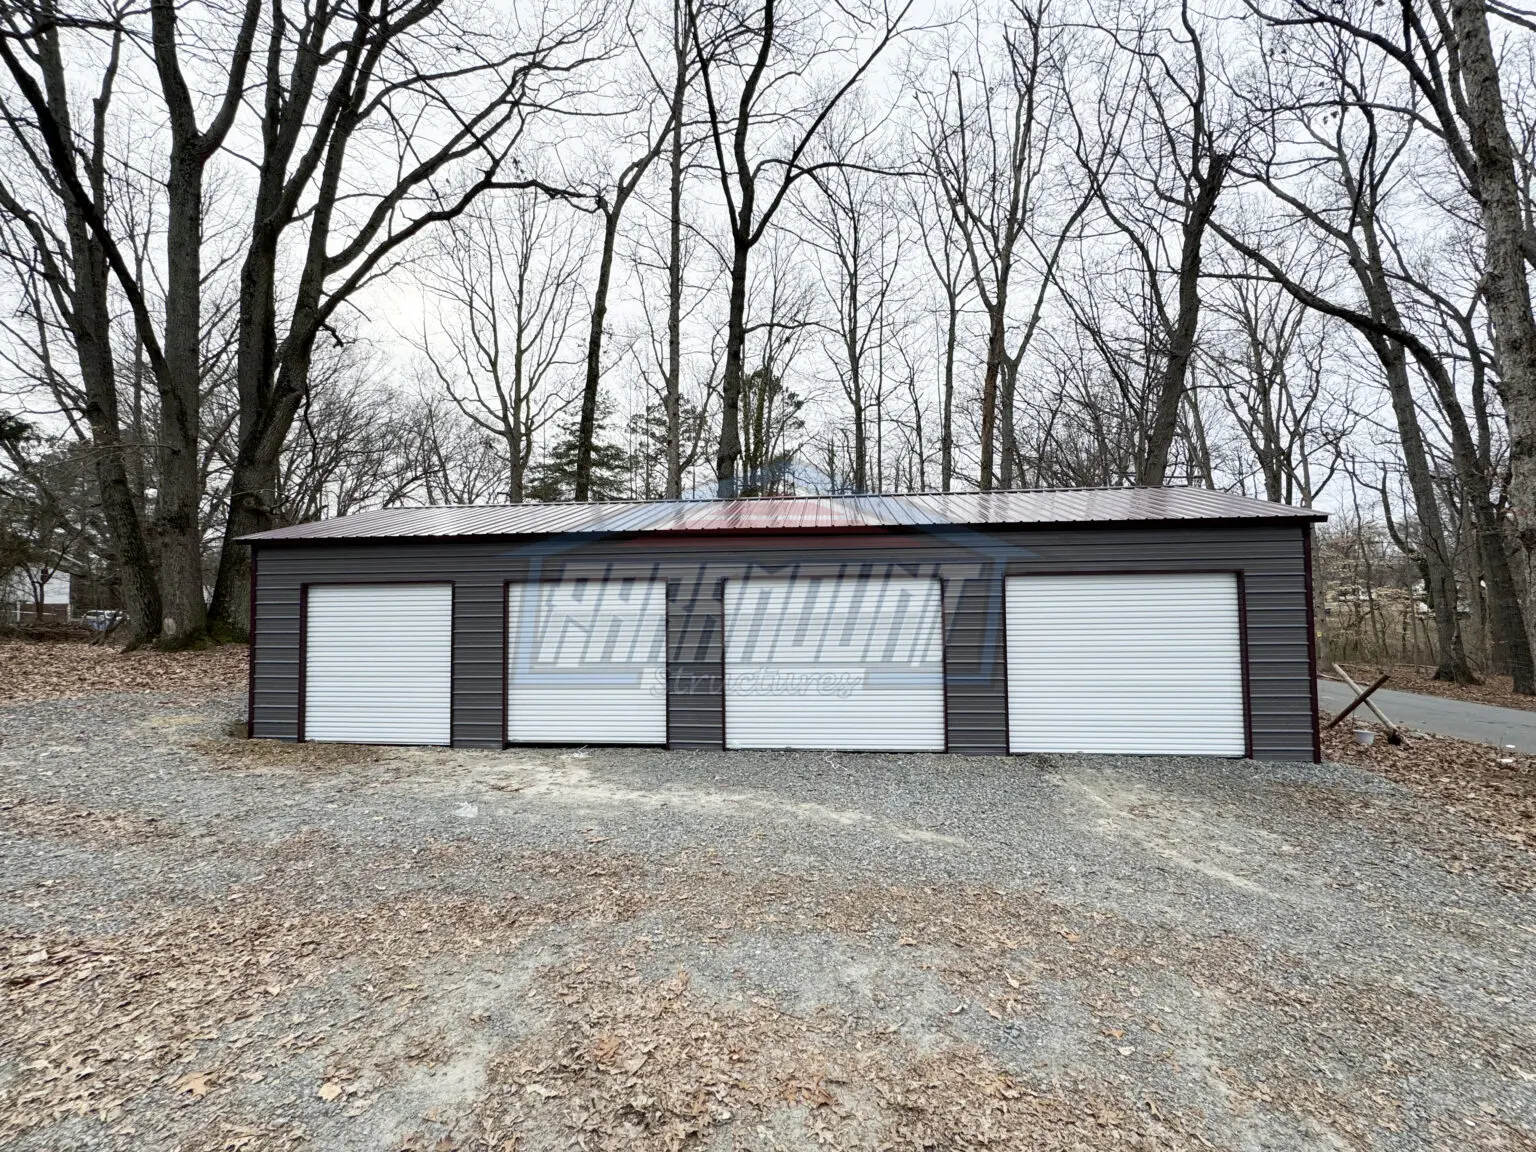 A metal building with three garage doors.